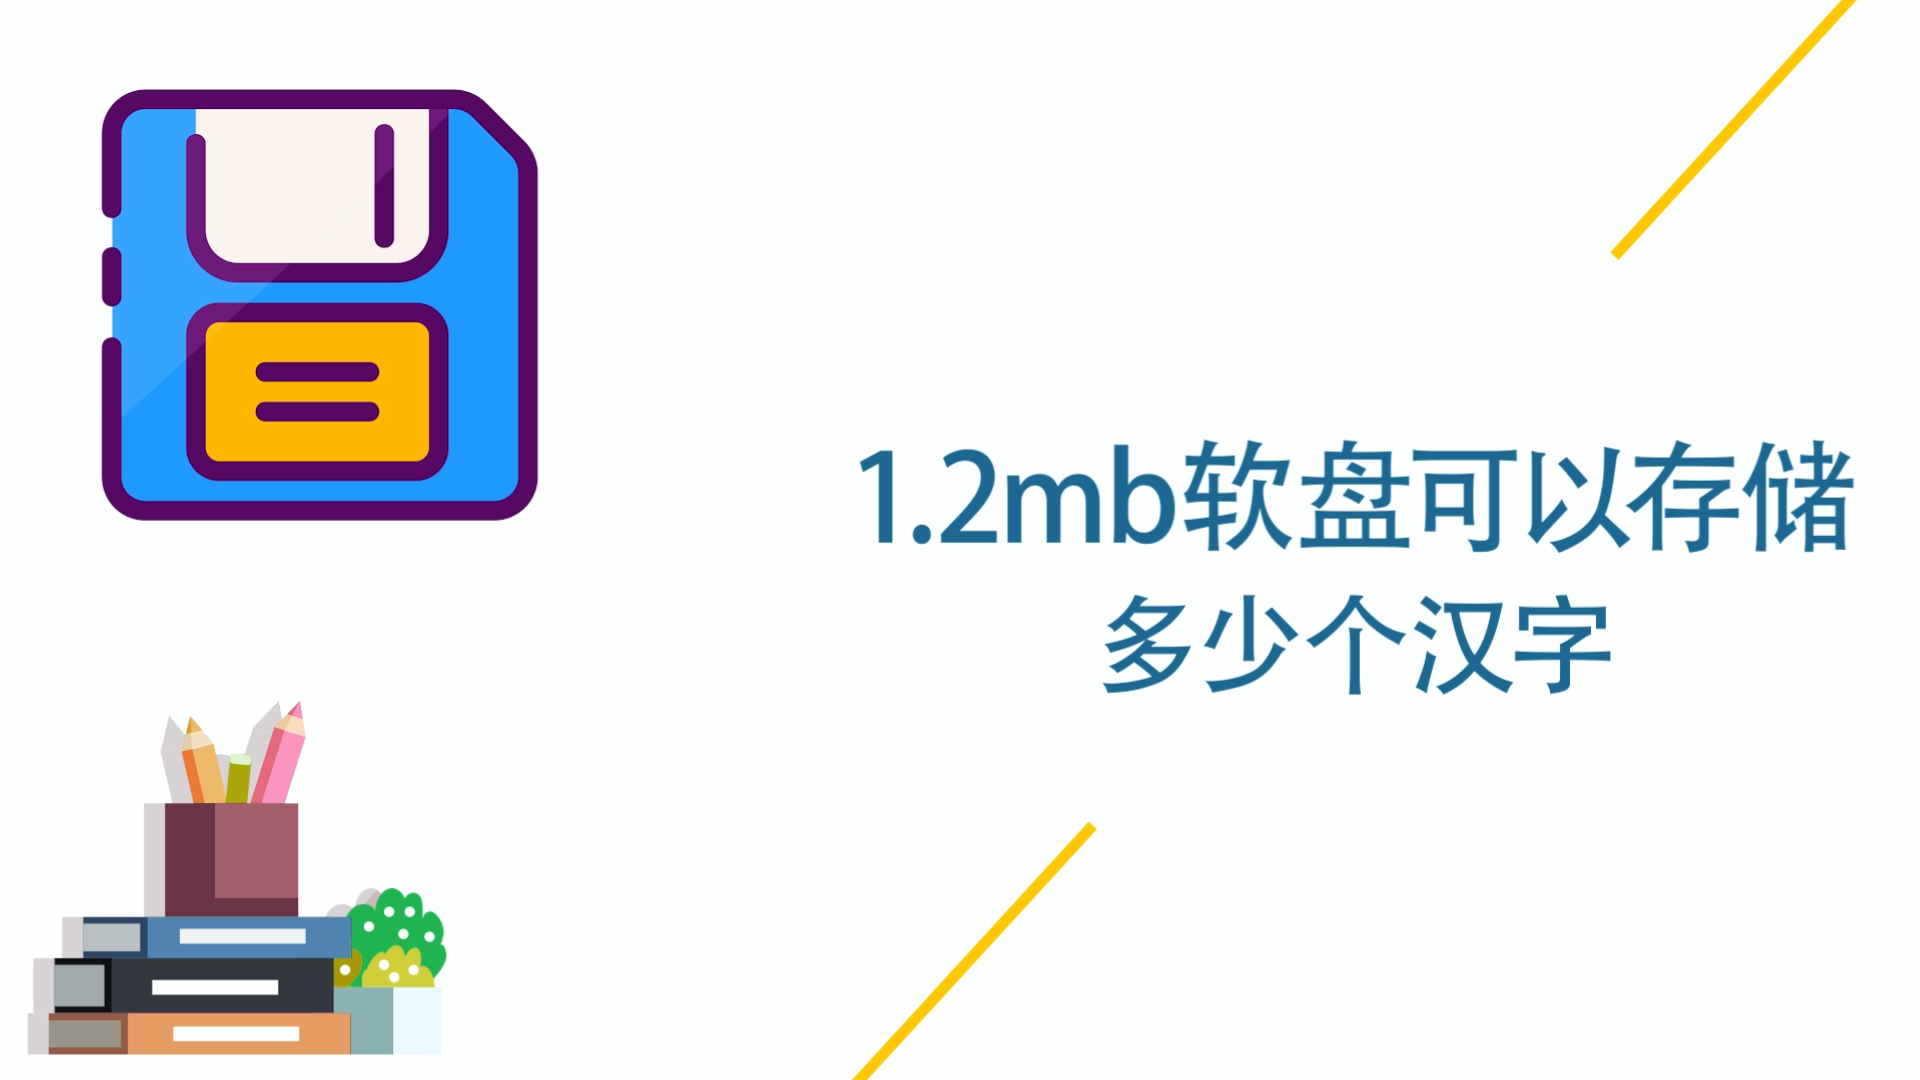 1.2mb软盘可以存储多少个汉字